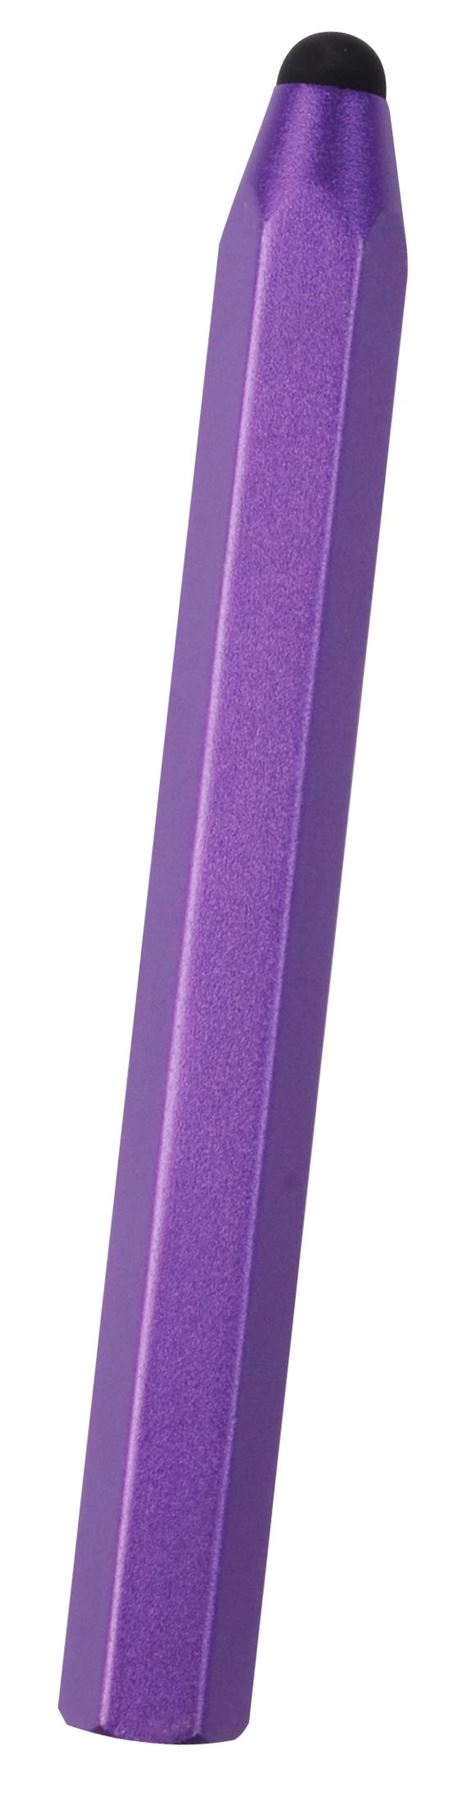 Purple Aluminium Crayon Shaped Stylus for iPad iPhone Tablet Smartphone